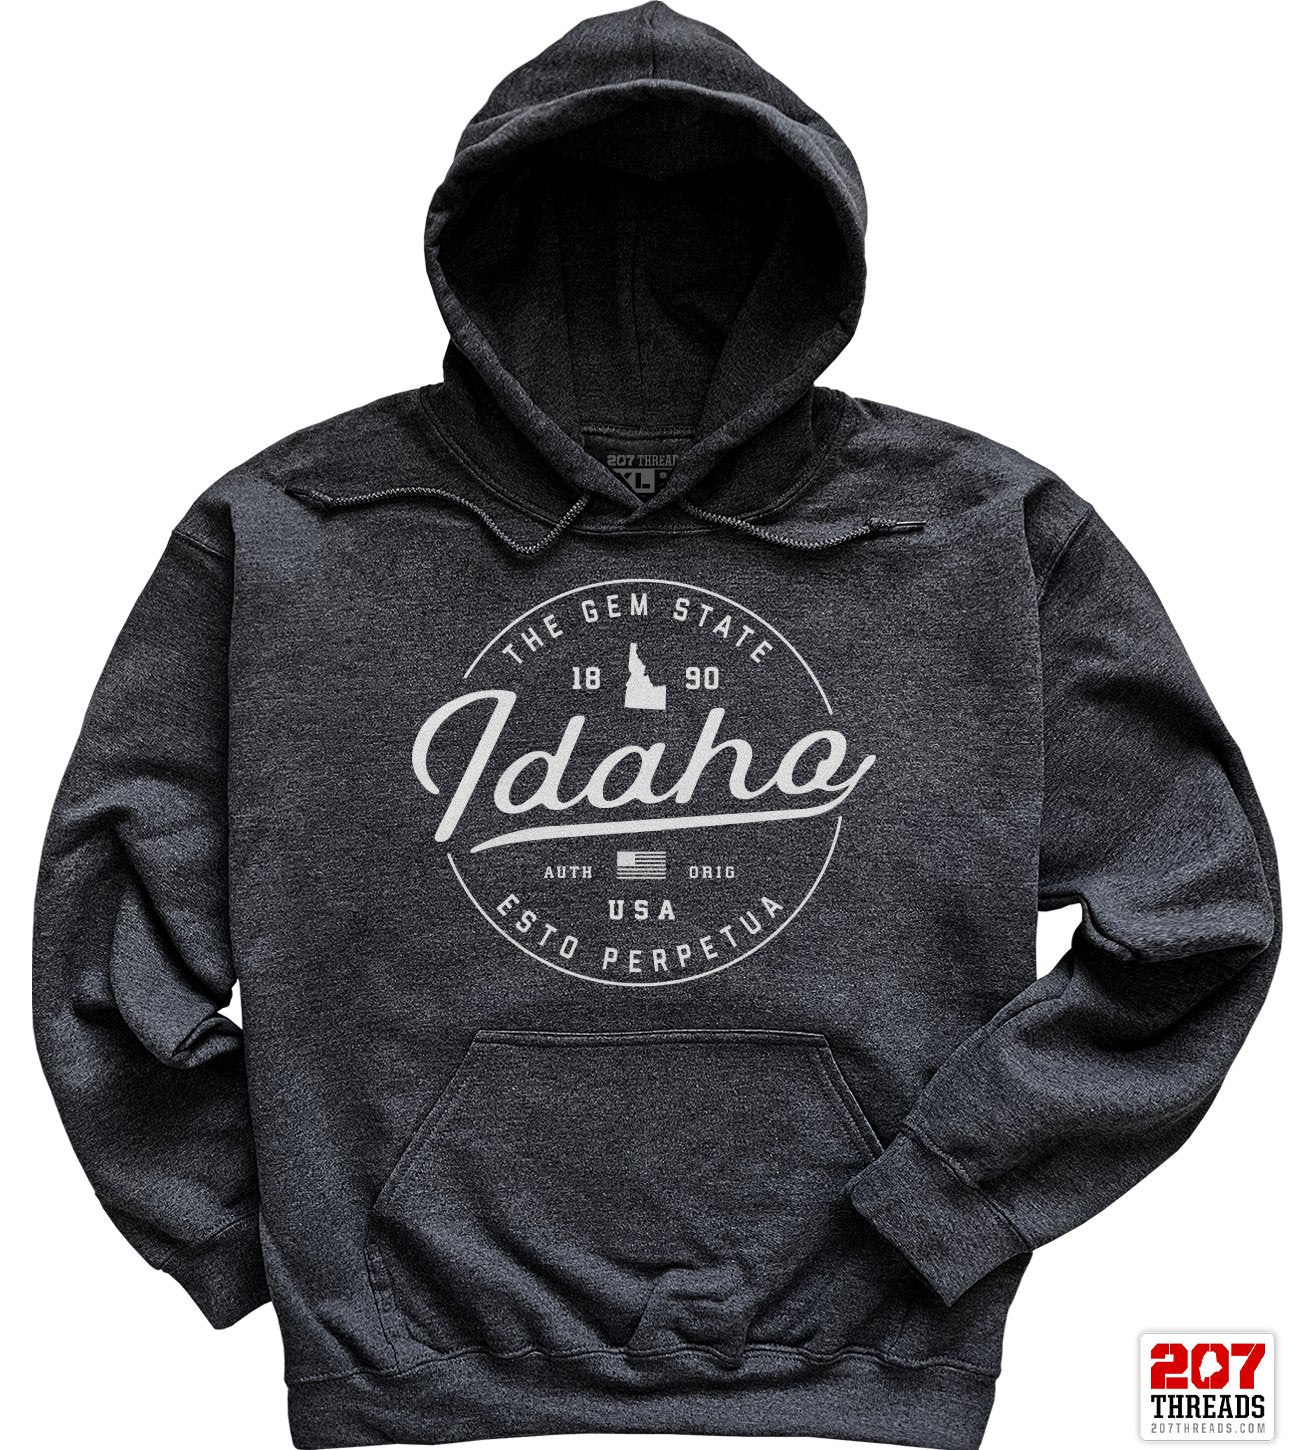 State of Idaho Hoodie Sweatshirt